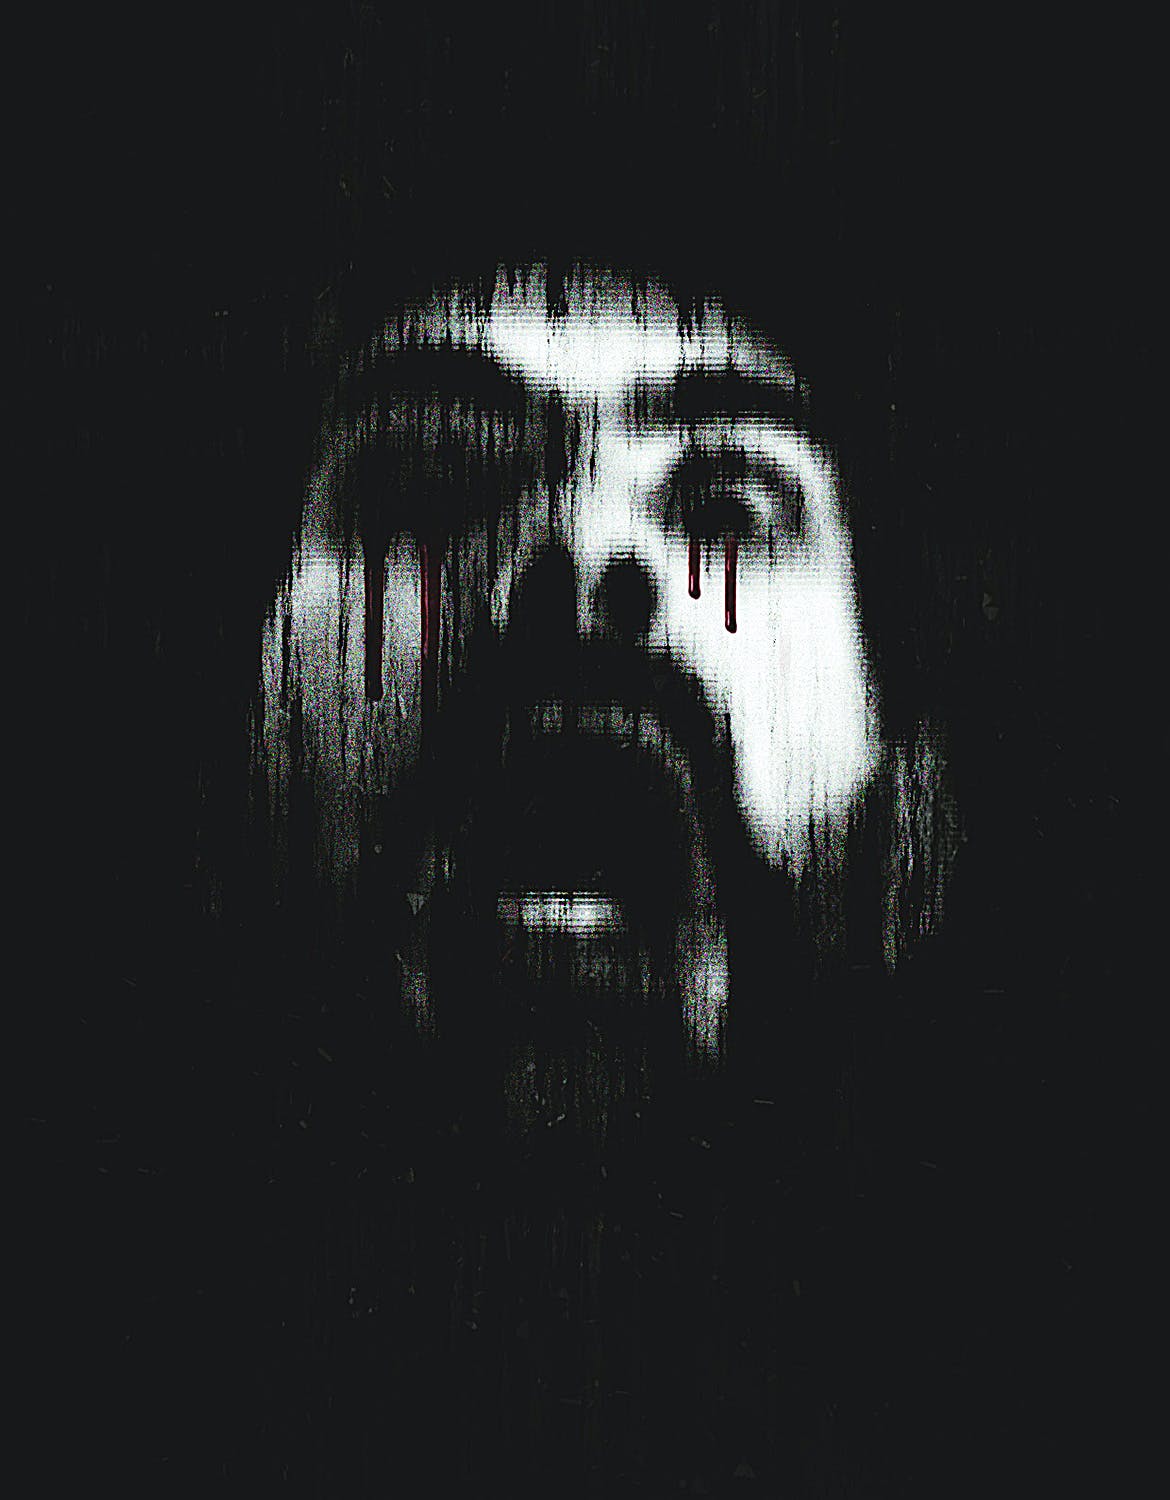 恐怖鬼脸照片处理效果PS动作模板 Ghost Face – Photoshop Action 插件预设 第5张